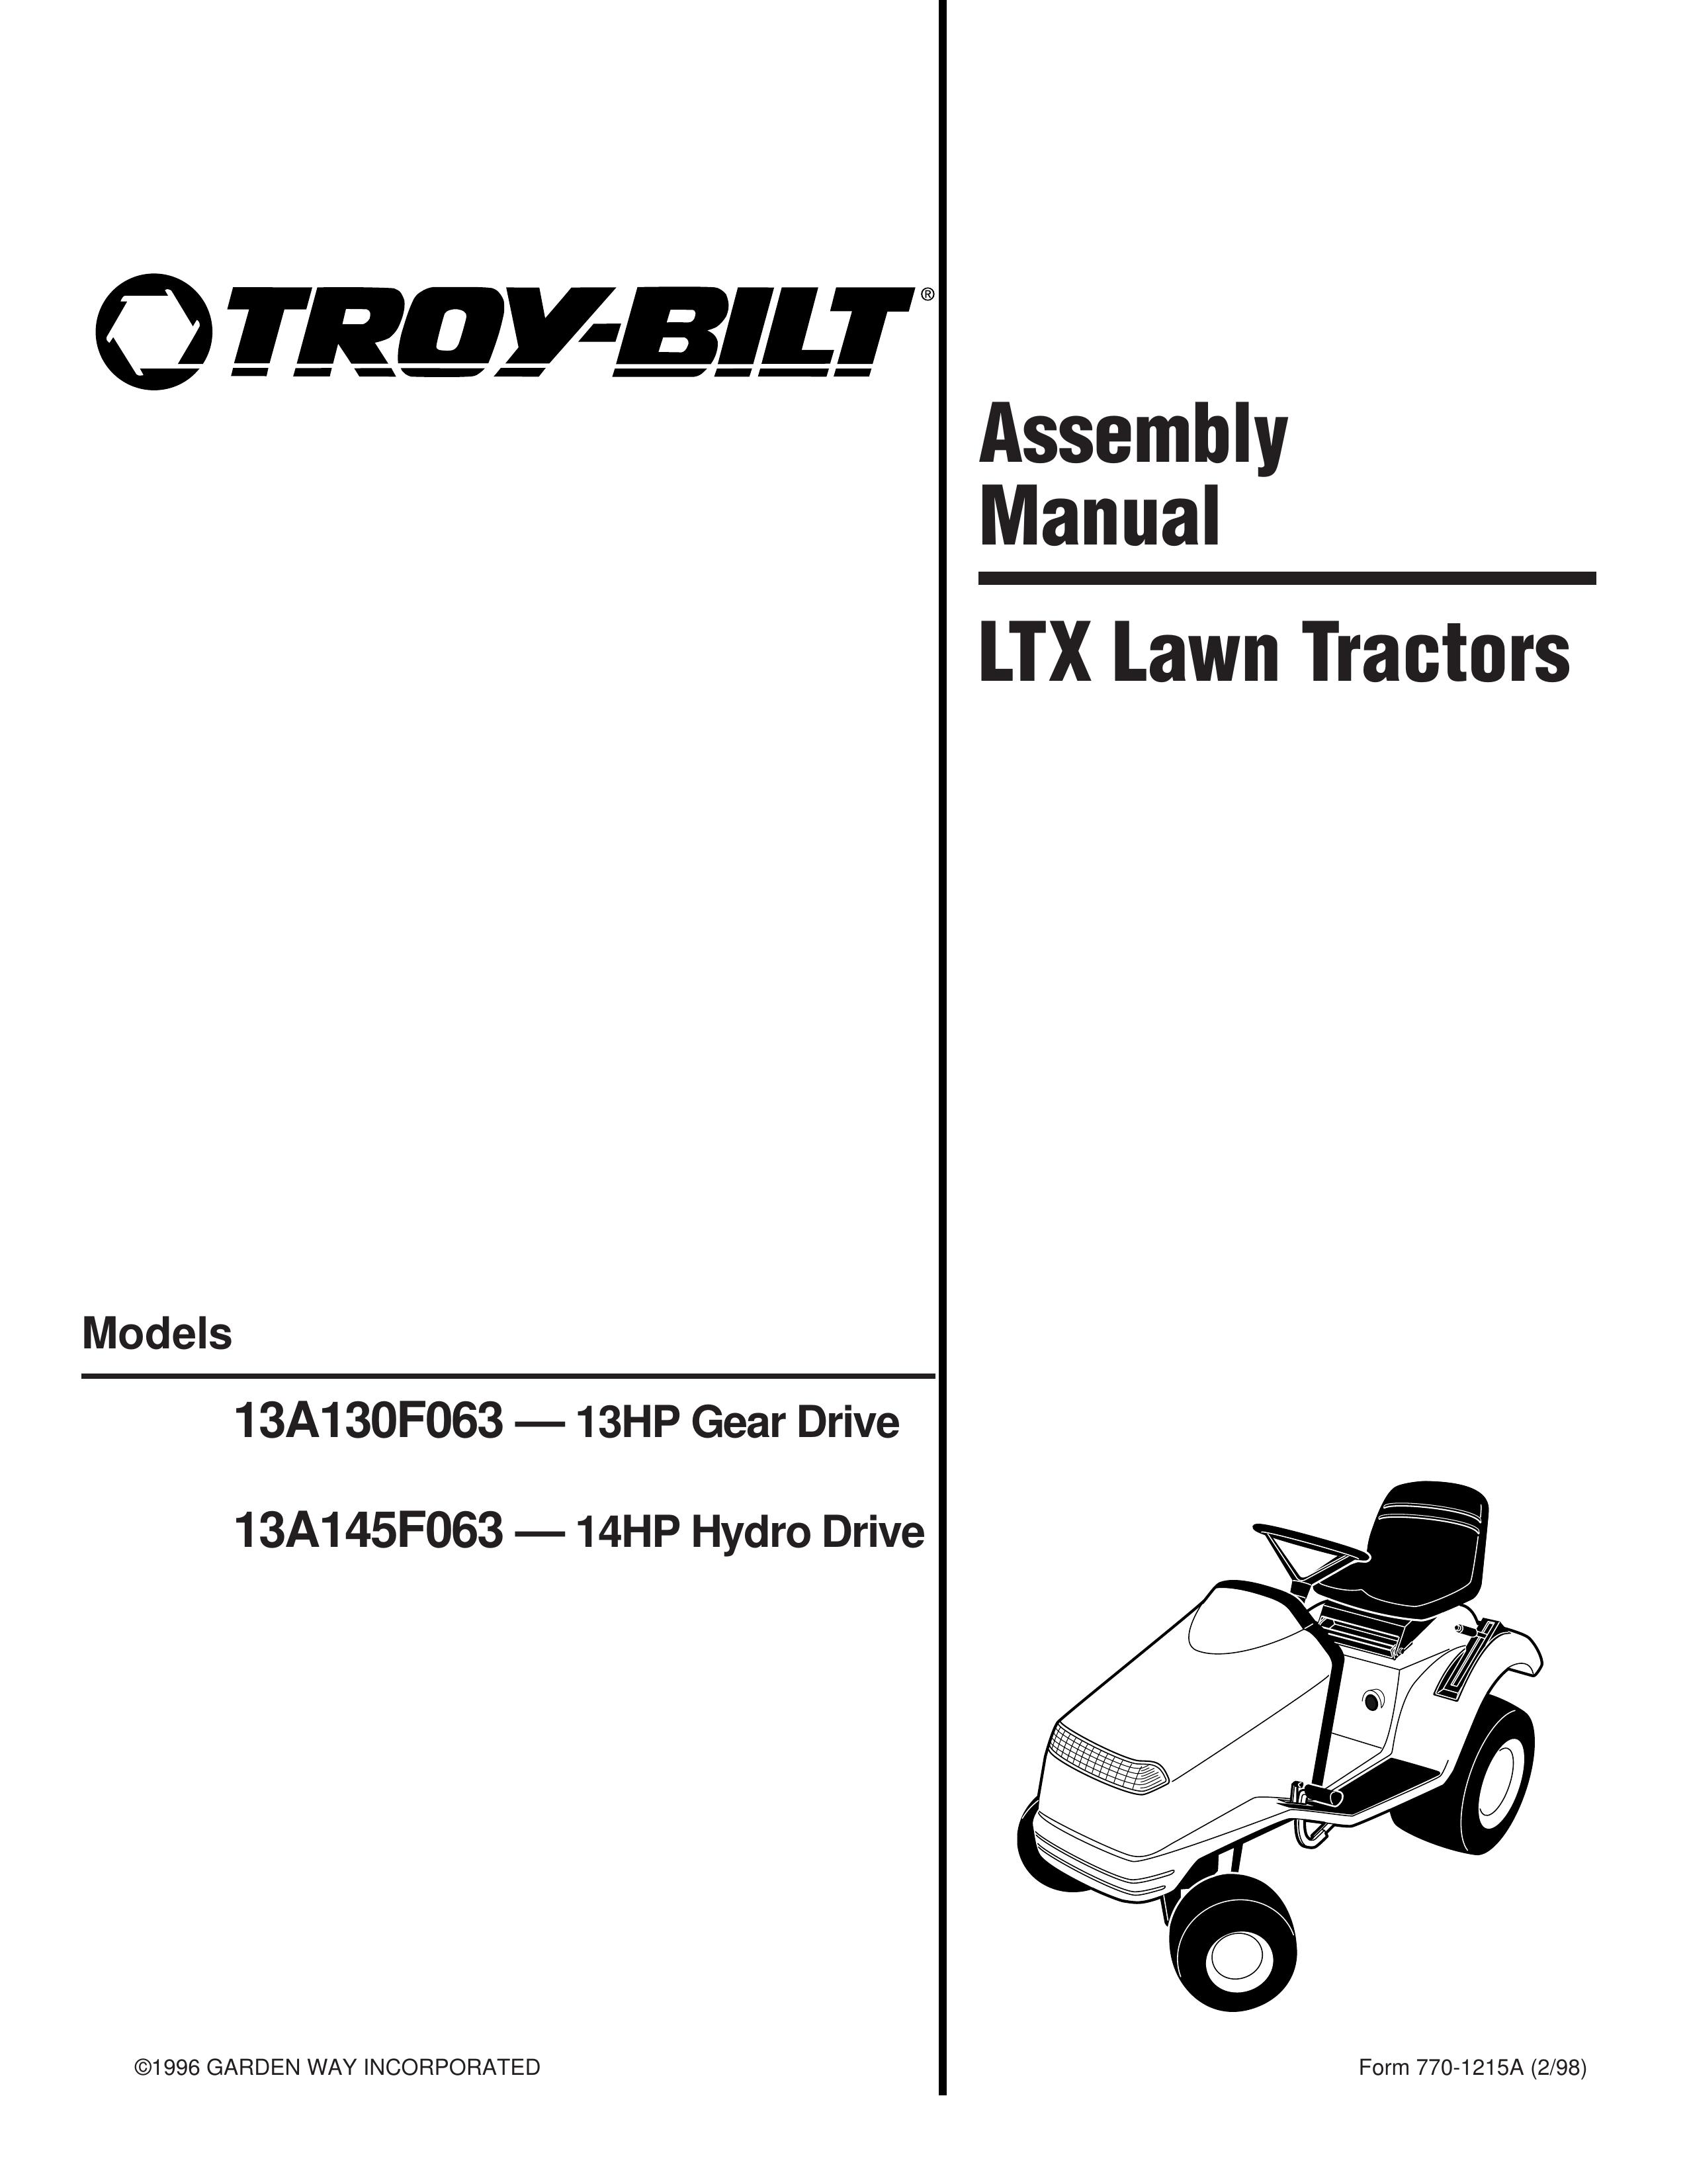 Troy-Bilt 13a130f063 Lawn Mower User Manual